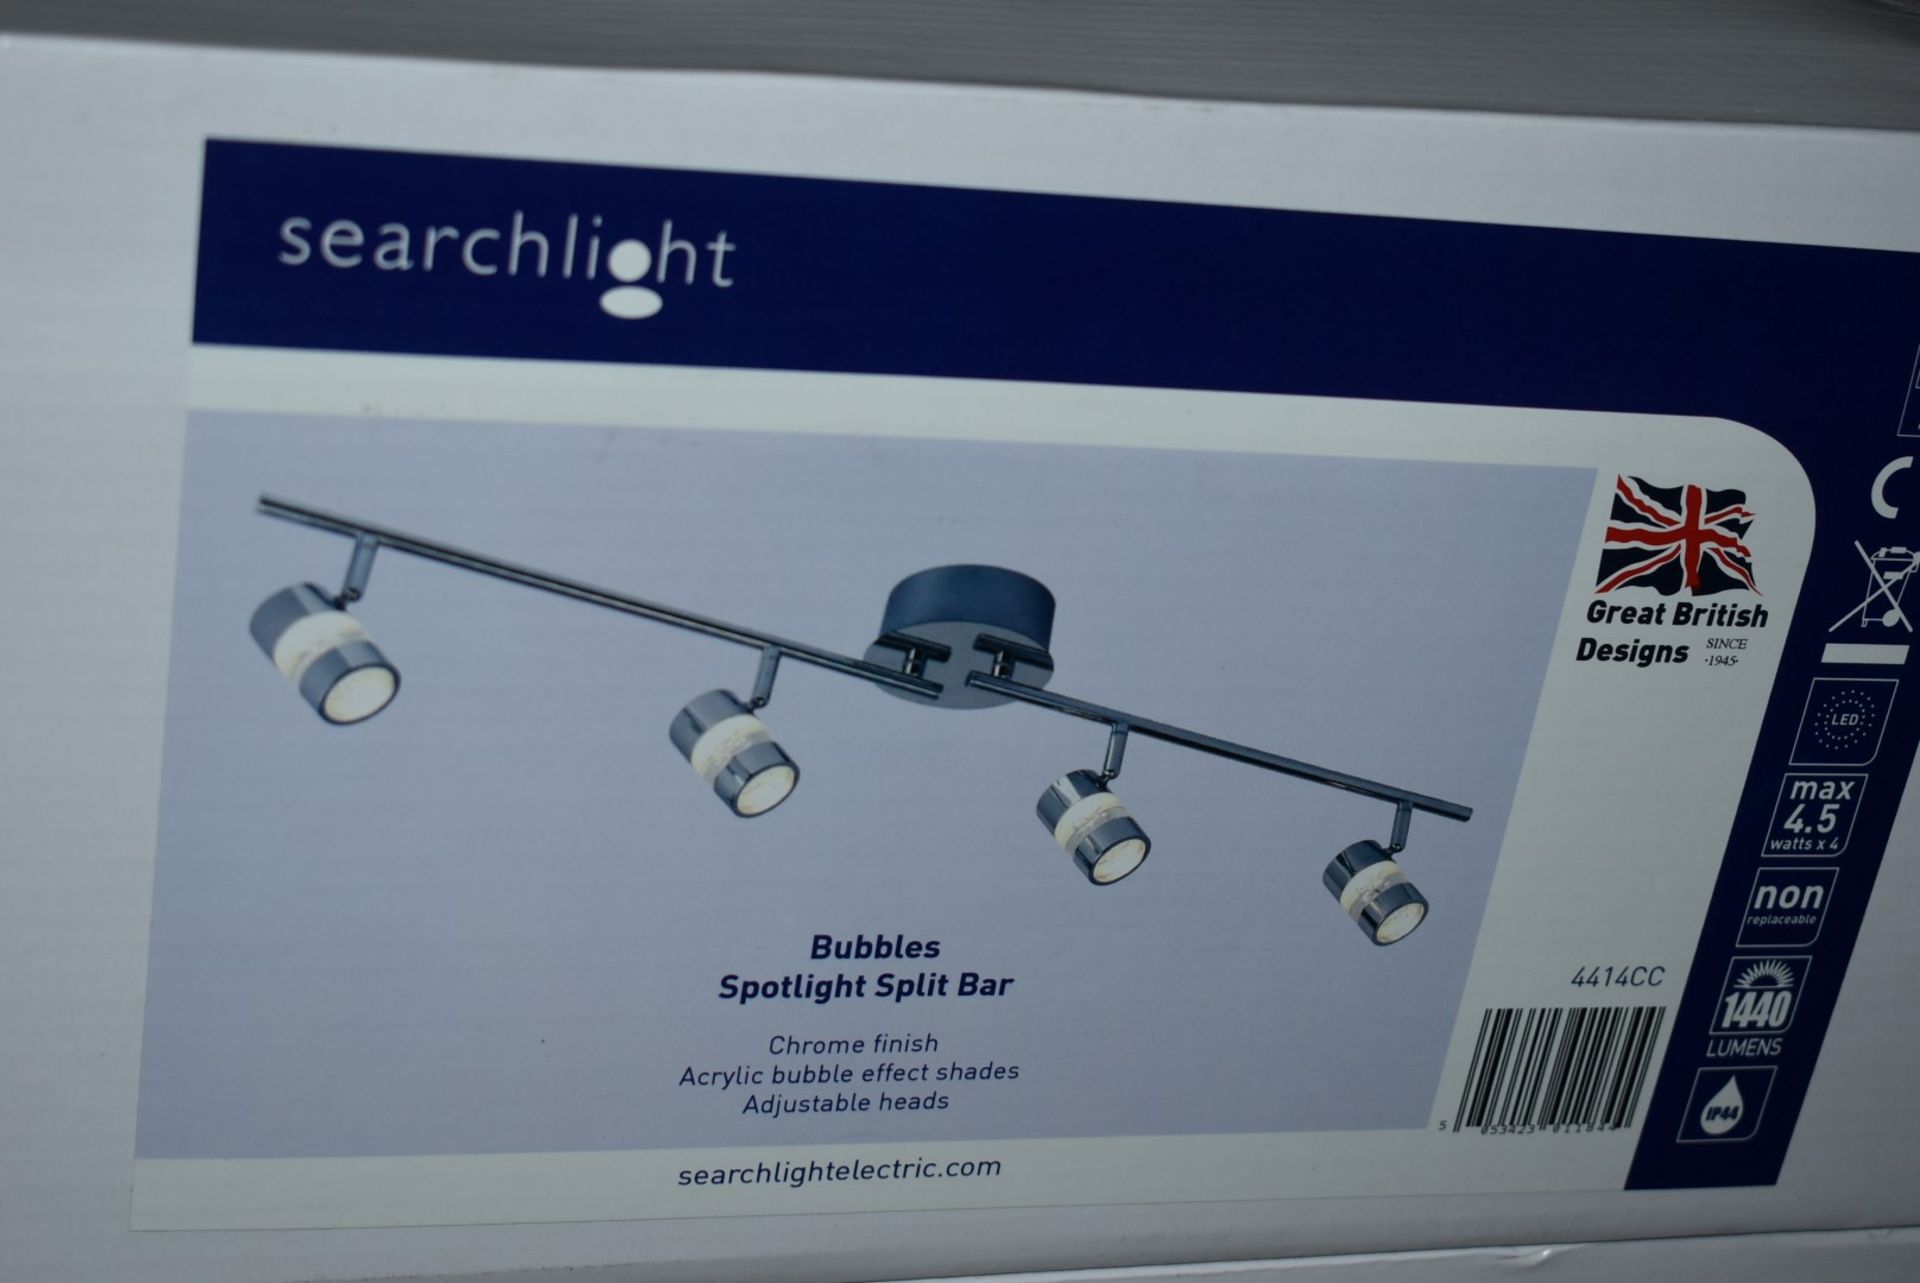 2 x Searchlight Bubbles Spotlight Split Bar Lights - Chrome Finish With Acrylic Bubble Effect Shades - Image 2 of 2